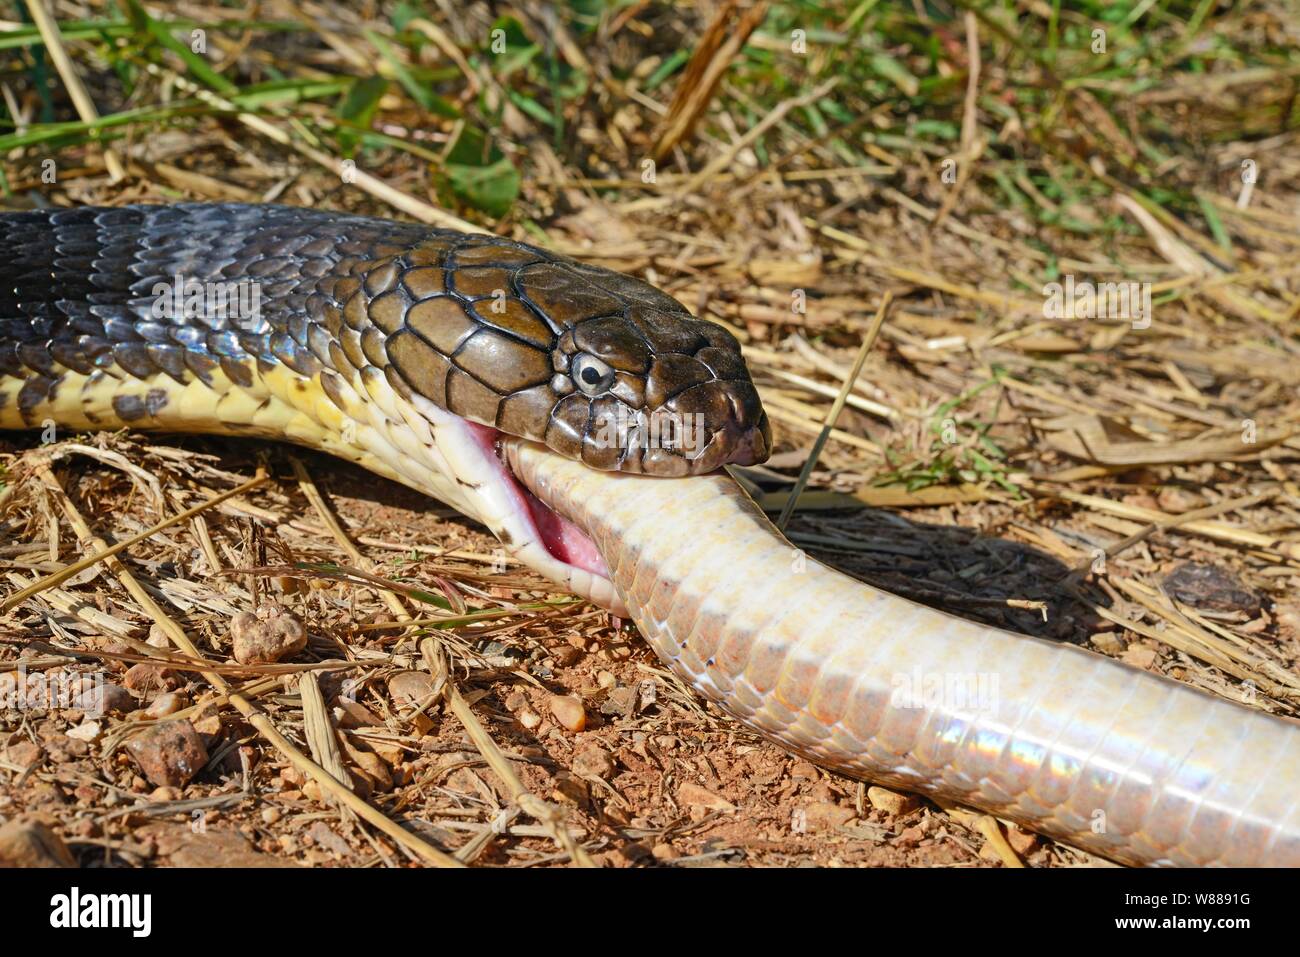 King cobra (Ophiophagus hannah), eating a snake, animal portrait, Thailand Stock Photo